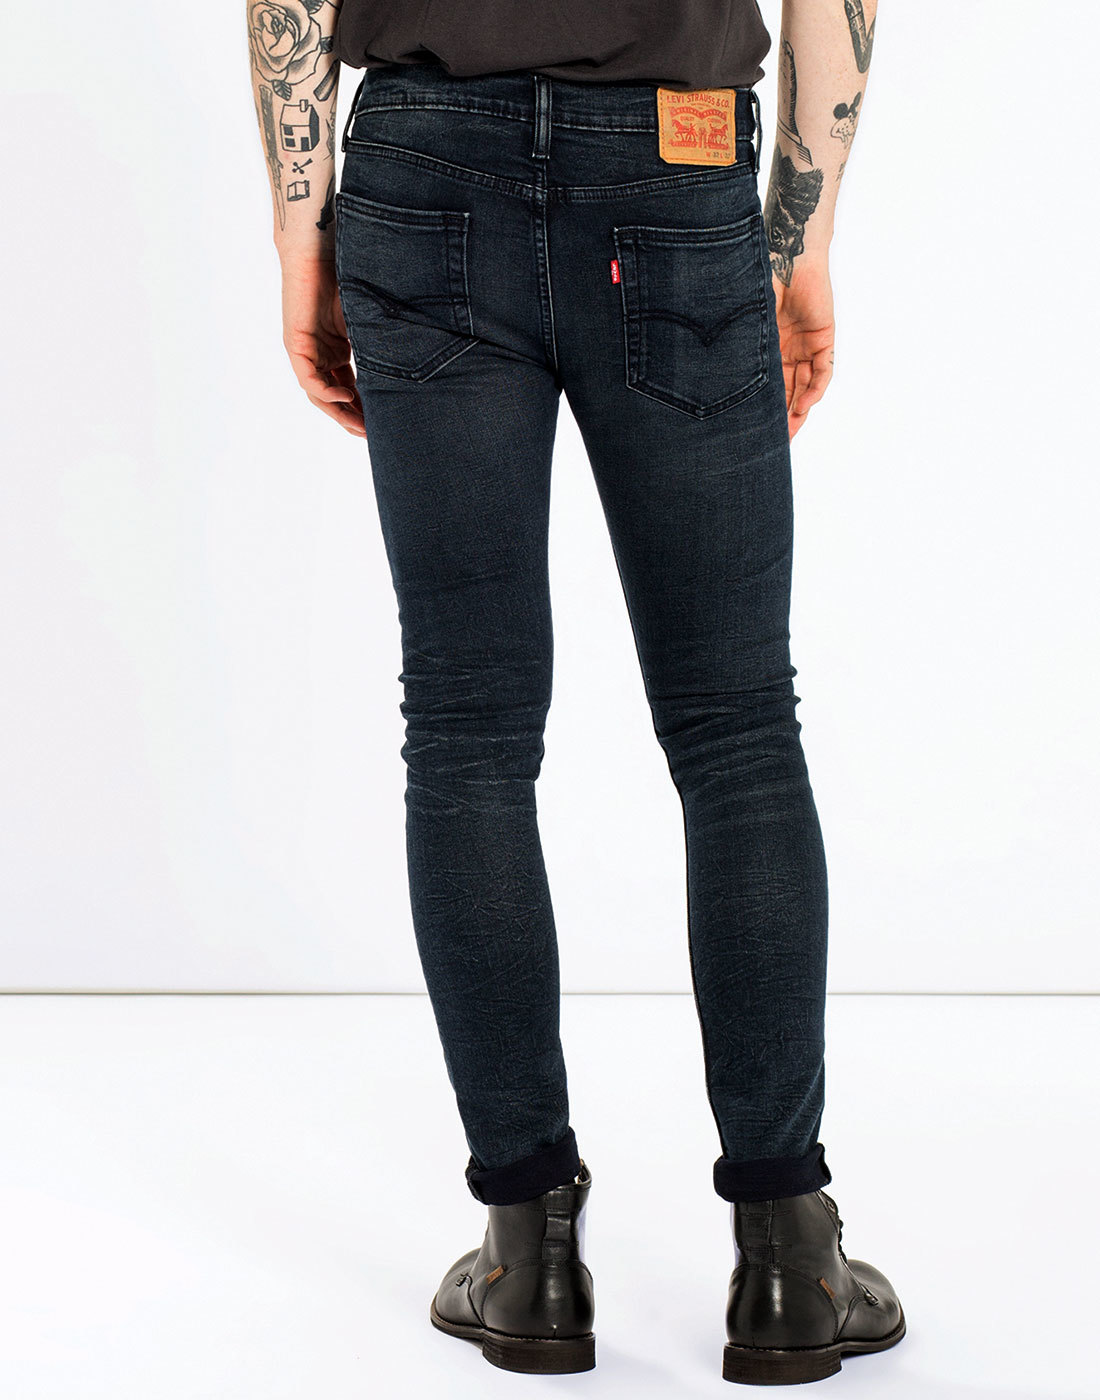 LEVI'S® 519 Retro Mod Extreme Skinny Fit Denim Jeans in Sharkley